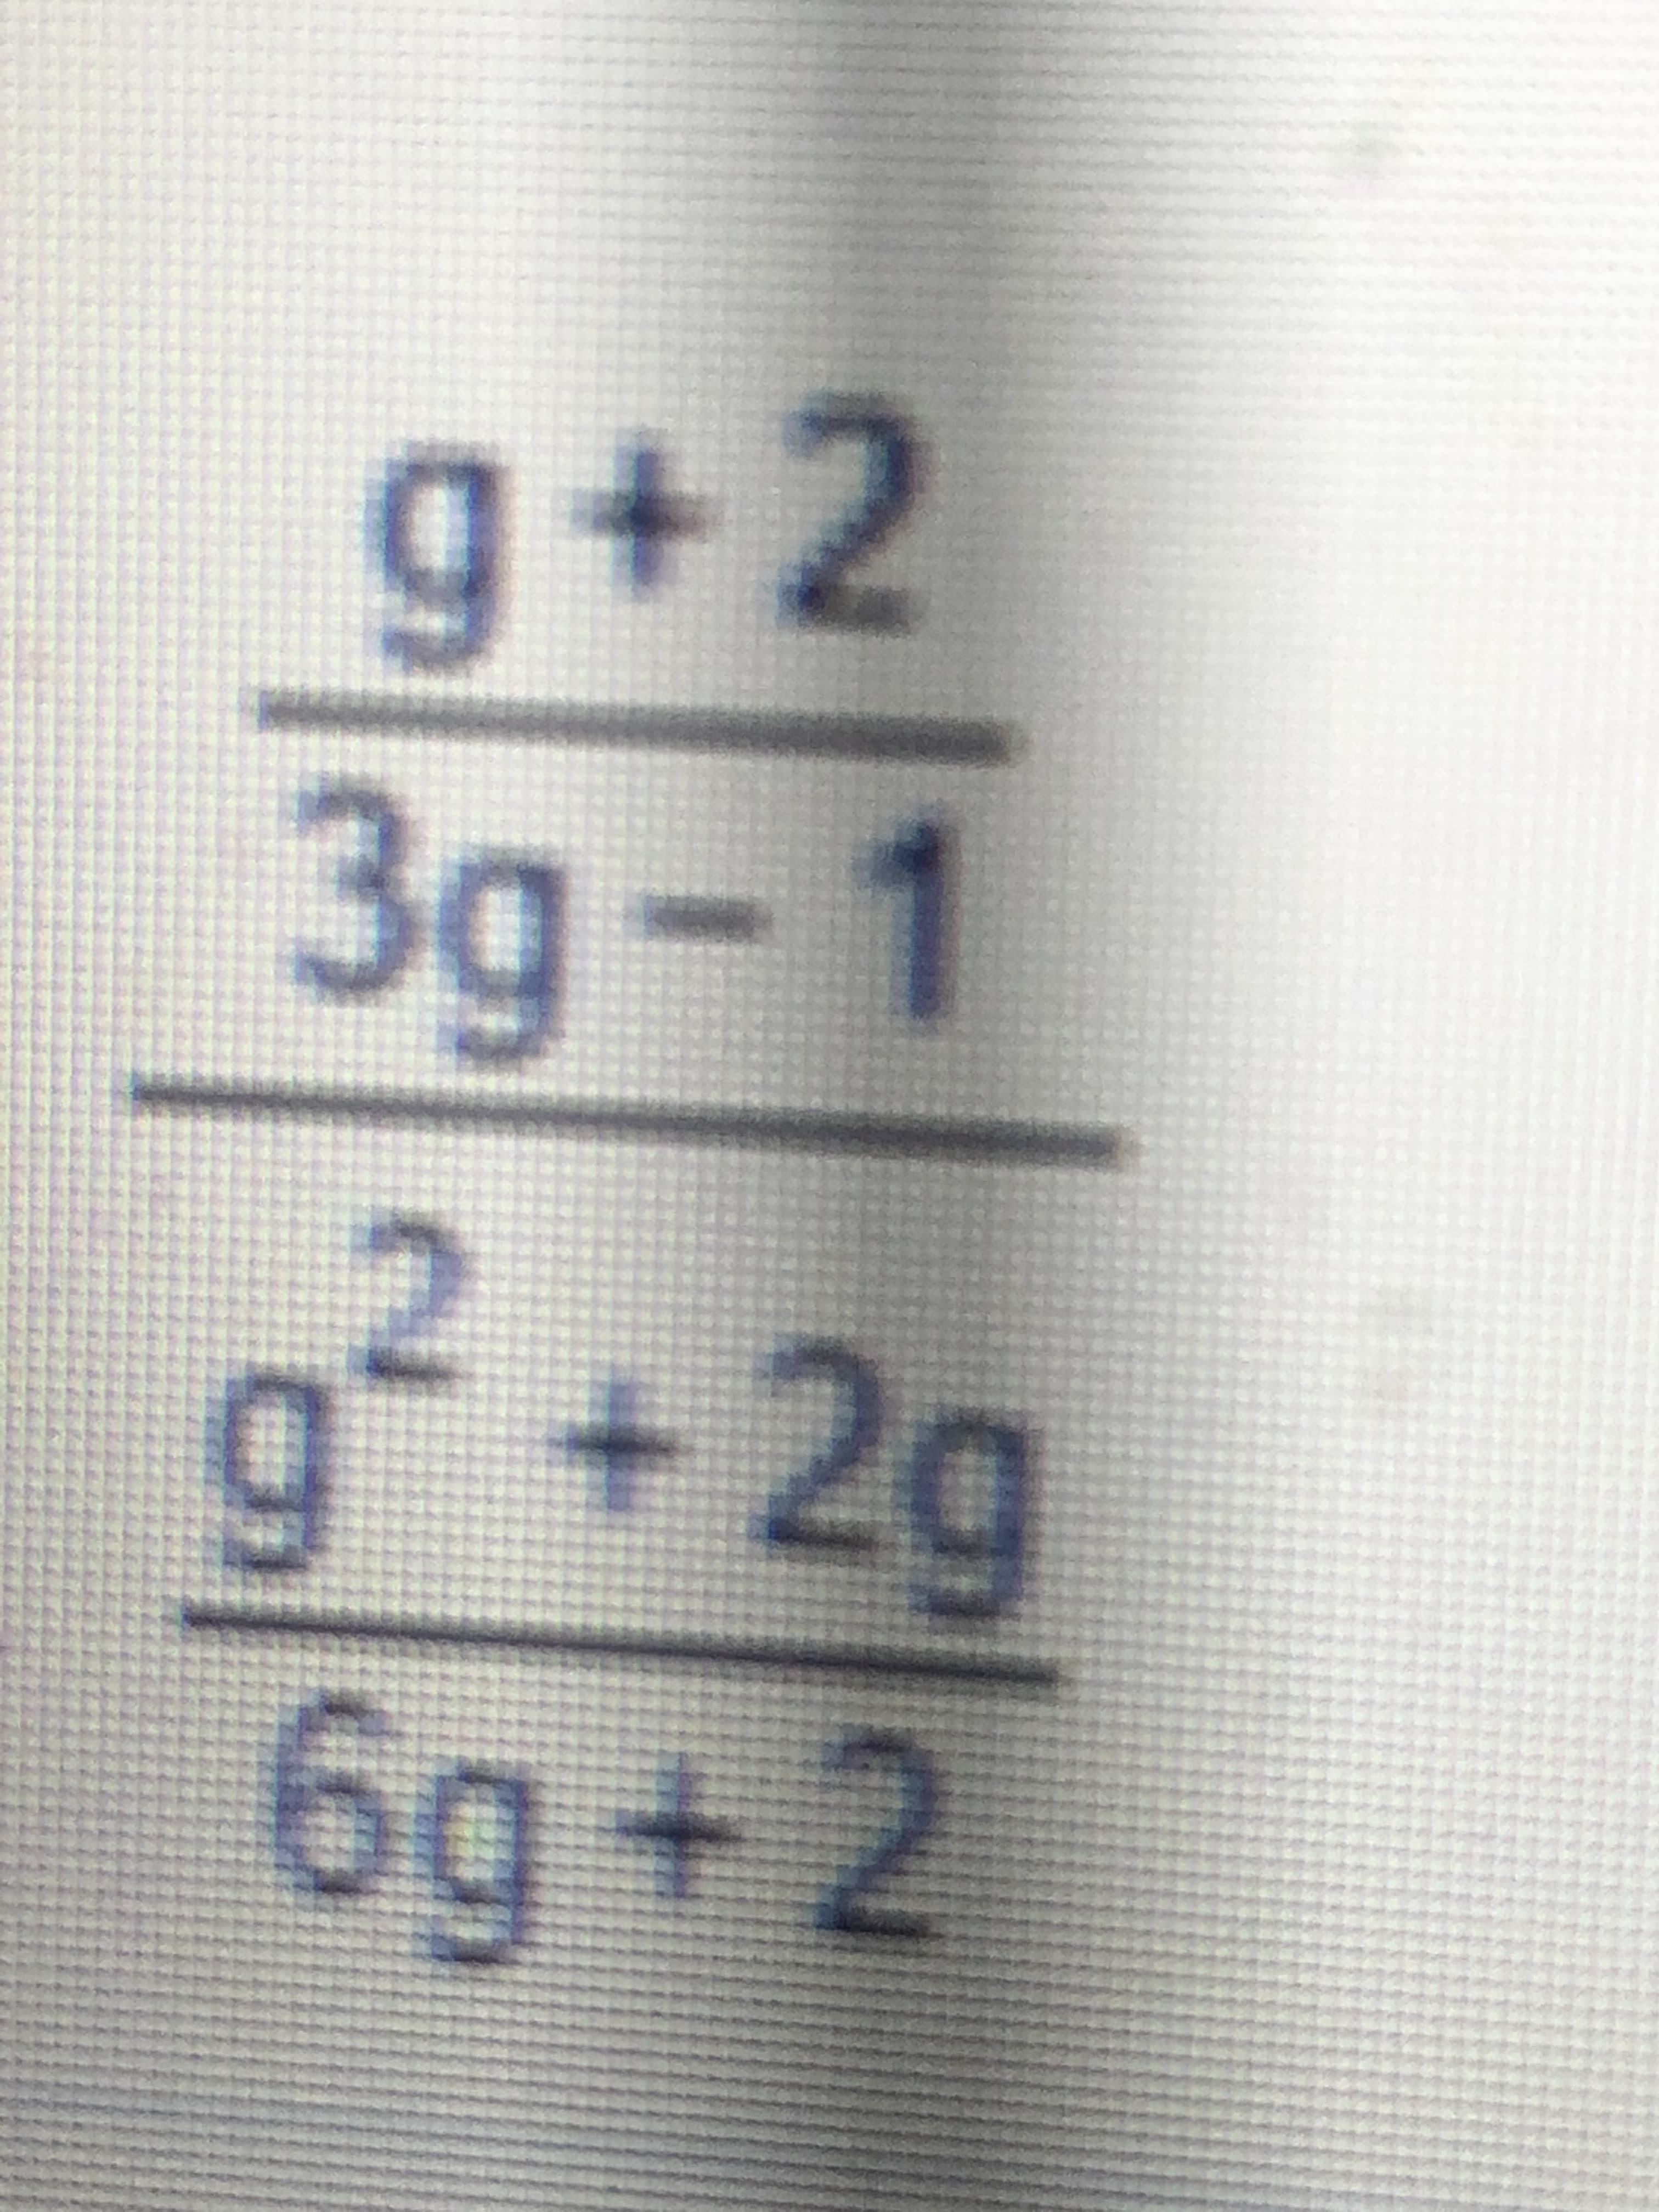 g+2
3g-1
2.
g+2g
6g+2
